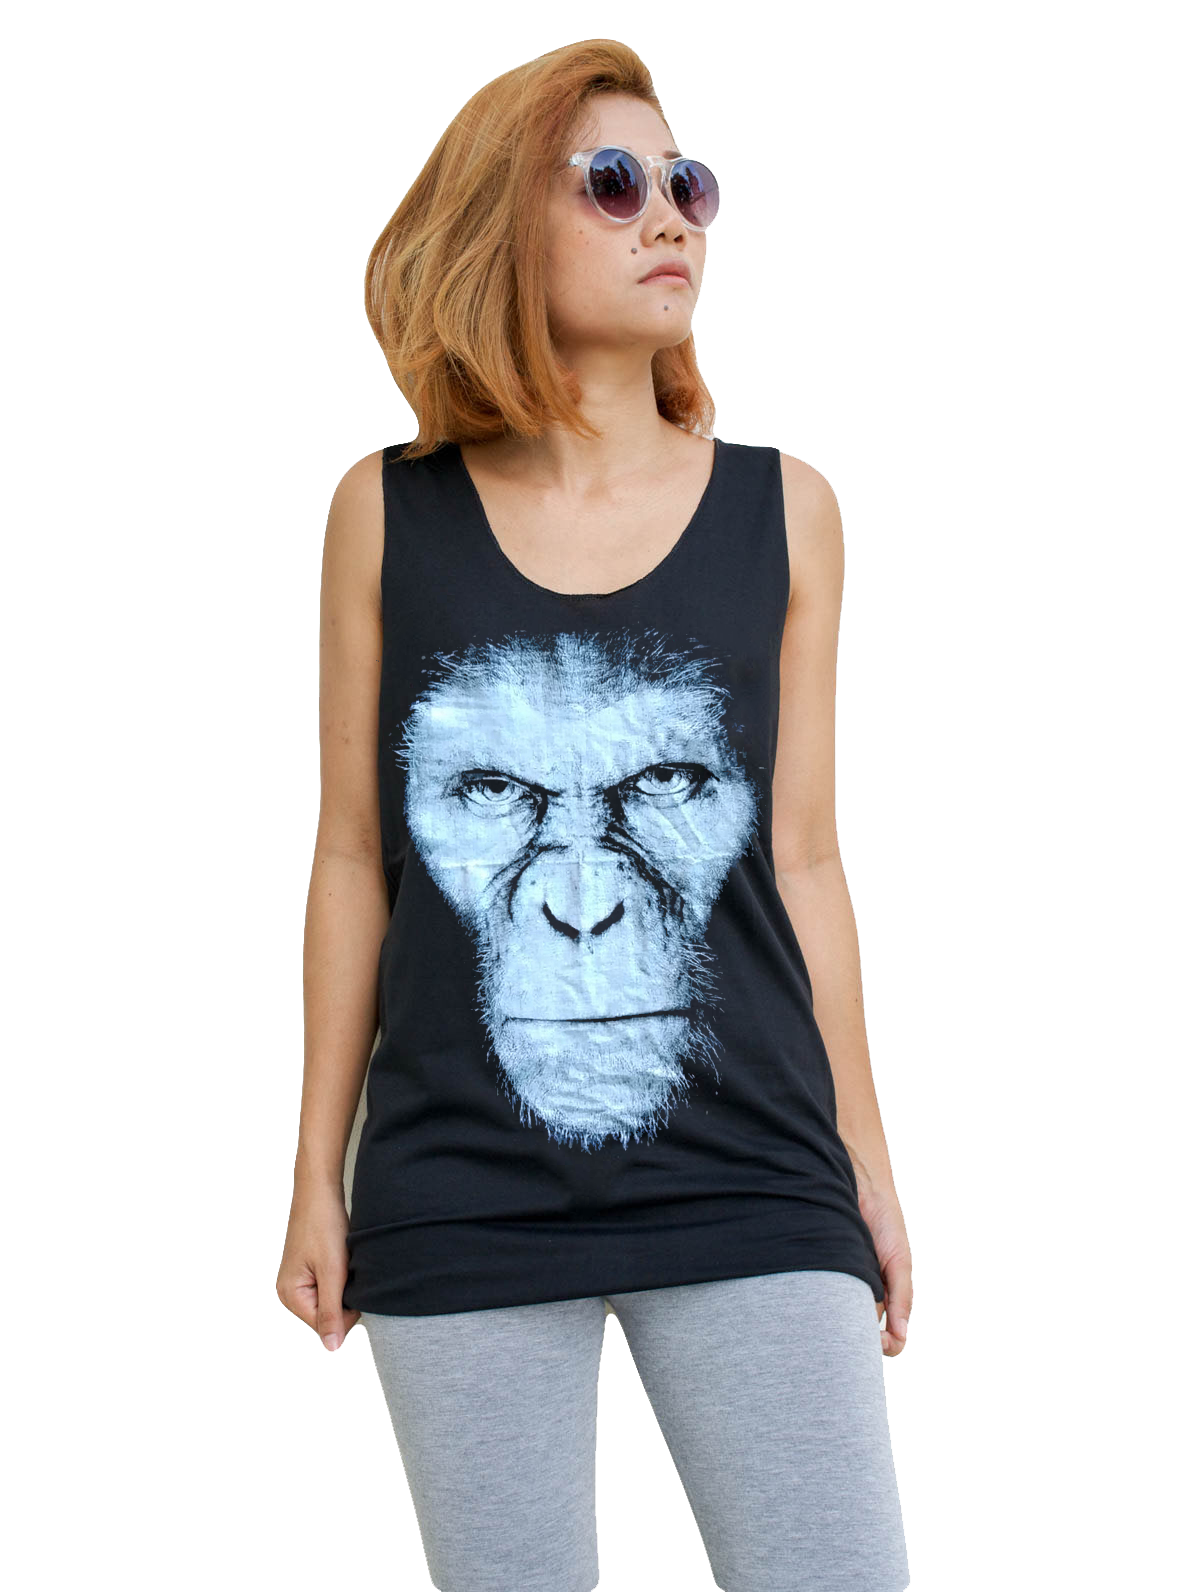 Unisex Caesar Planet Of The Apes Tank-Top Singlet vest Sleeveless T-shirt